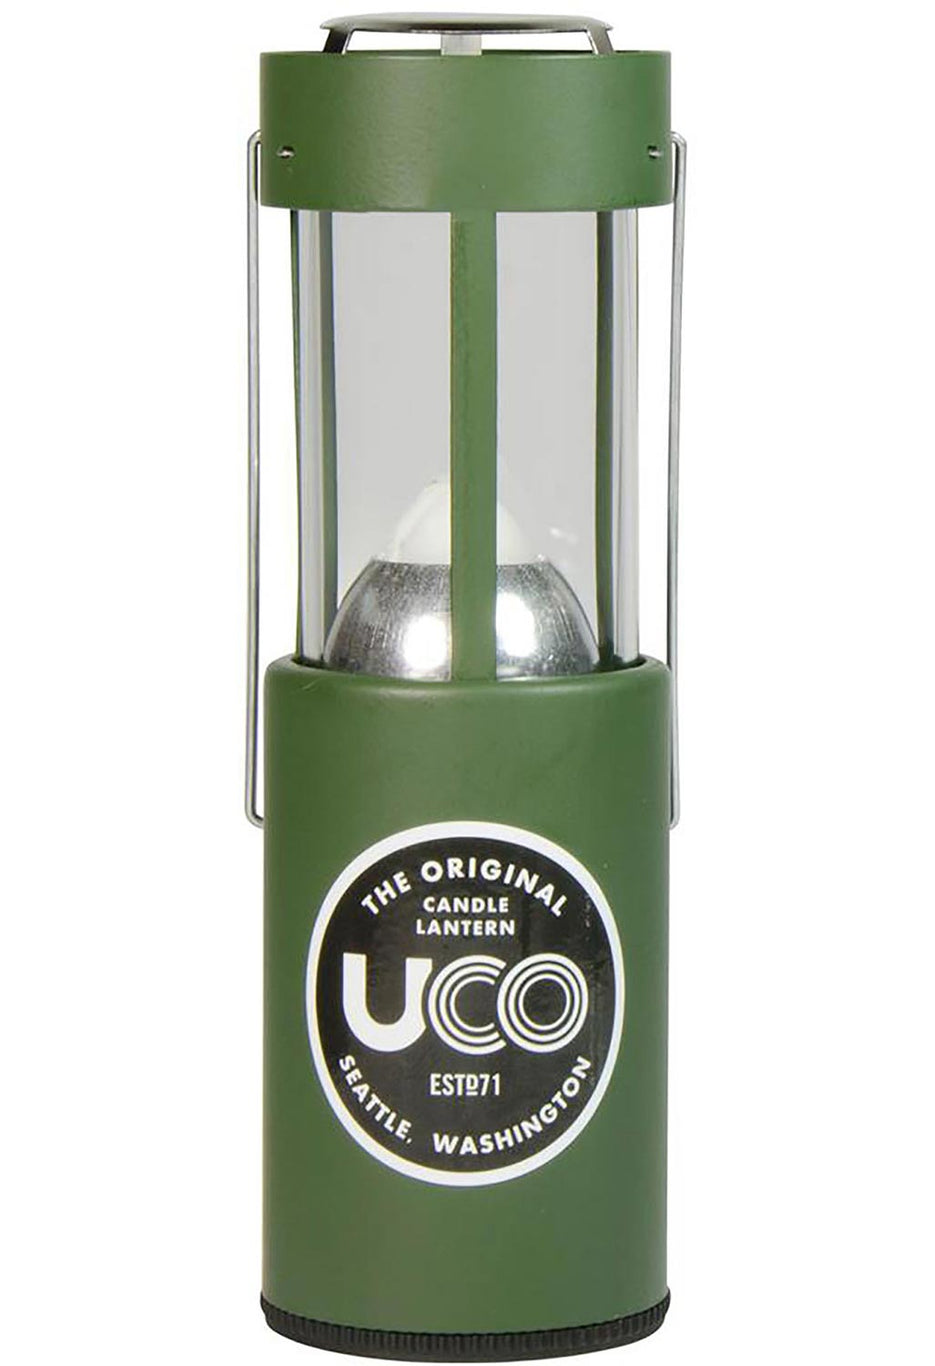 UCO Original Candle Lantern  1